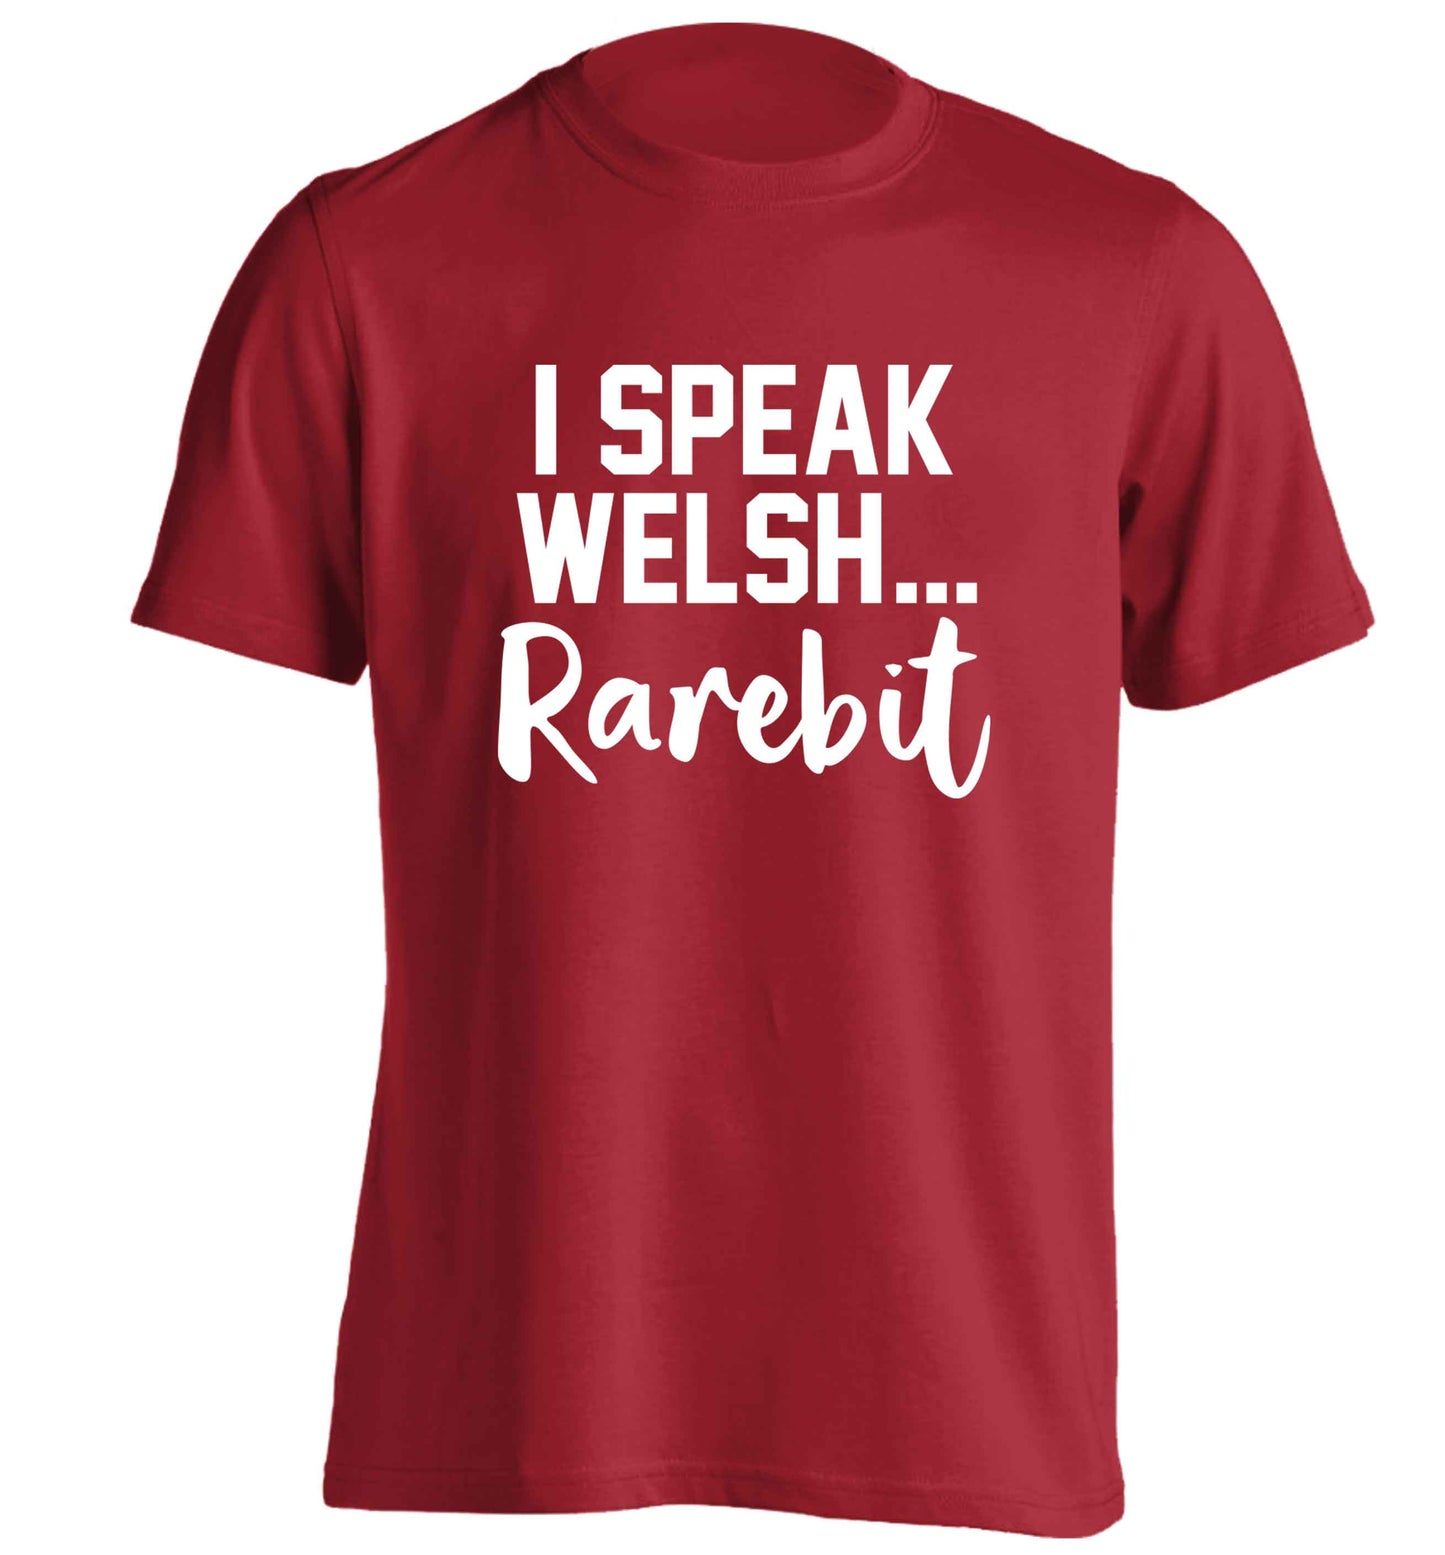 I speak Welsh...rarebit adults unisex red Tshirt 2XL